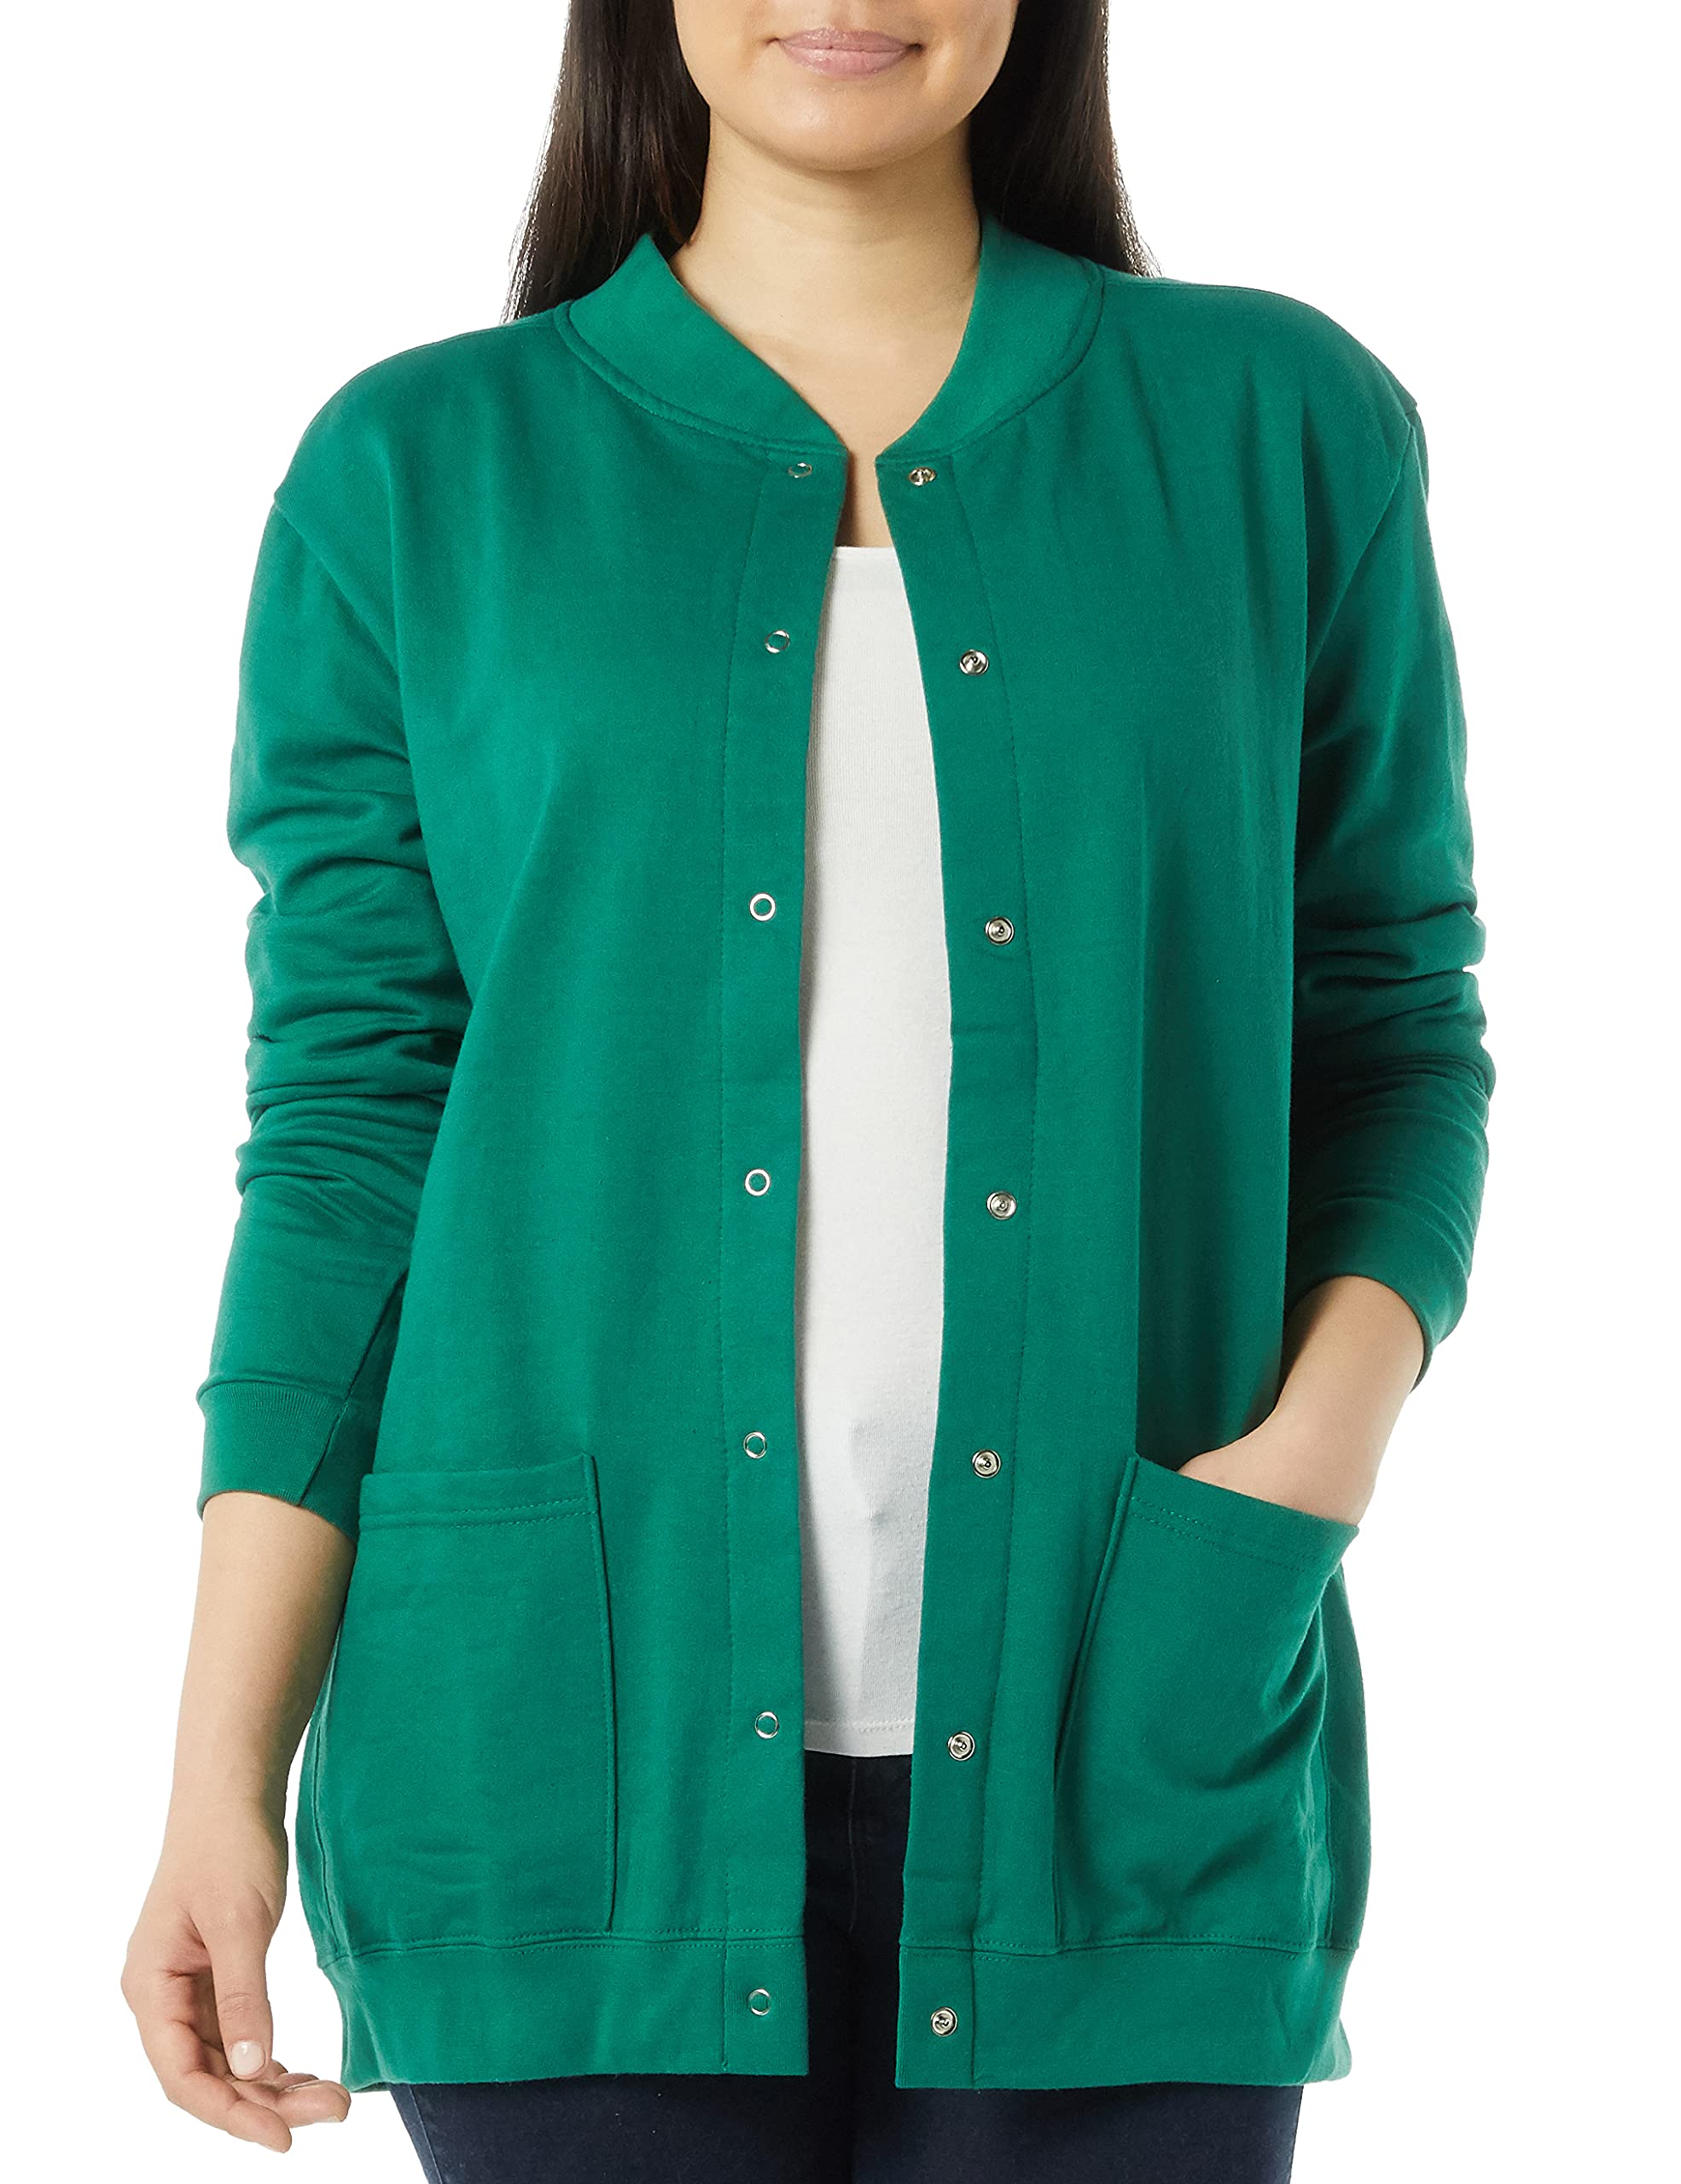 AmeriMark Women Fleece Snap Button cardigan Sweatshirt coat - Ladies Soft Lightweight Warm Long Sleeve Jacket with Pockets